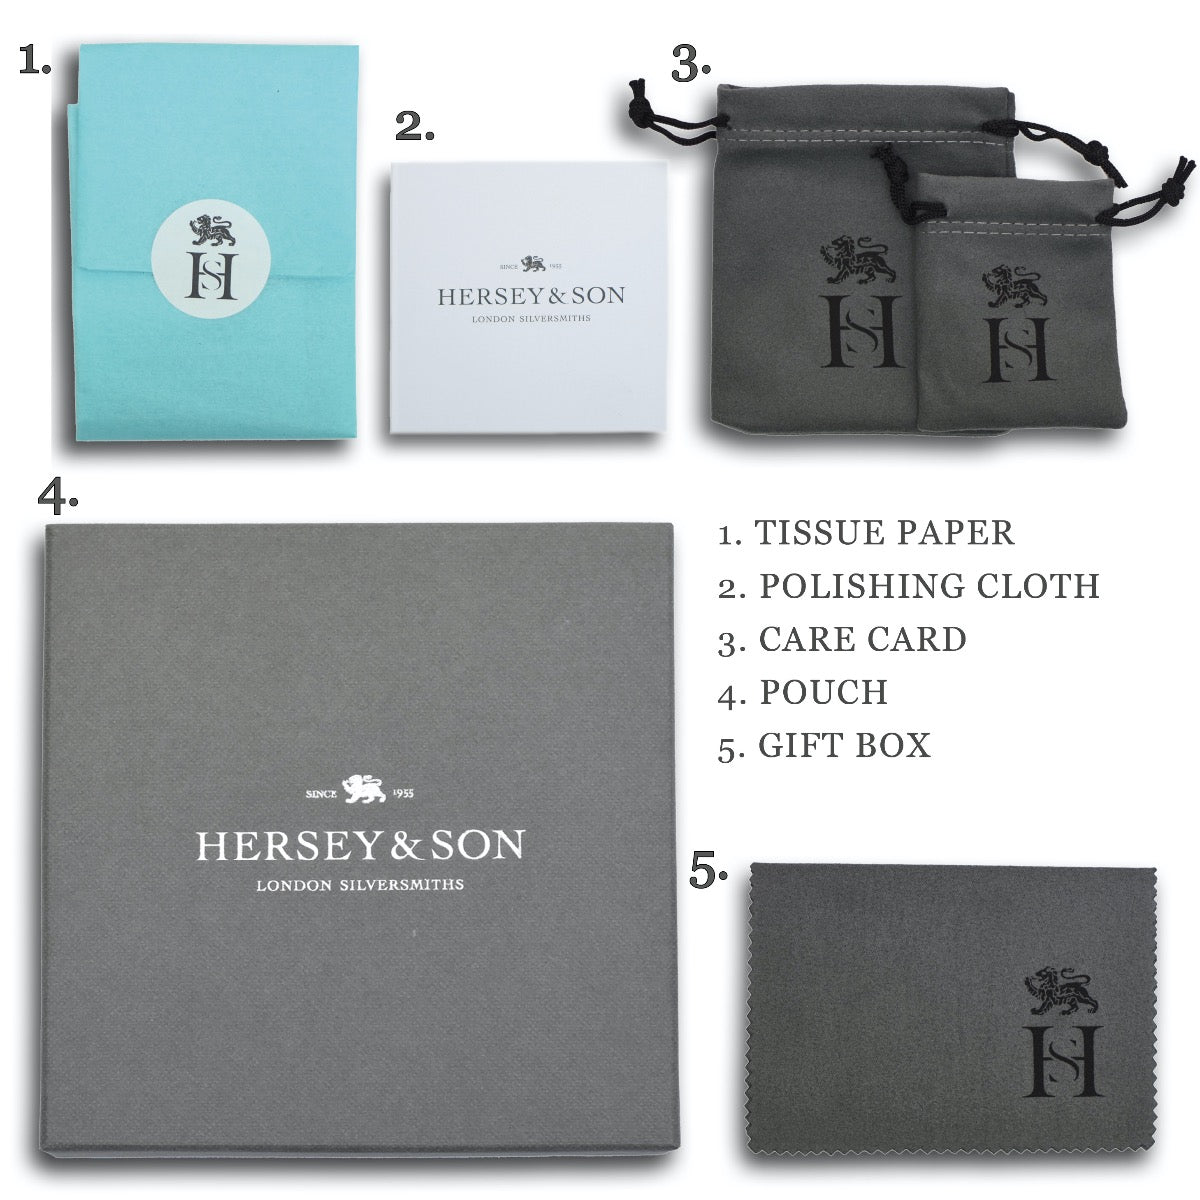 Hersey & Son Silversmiths packaging 